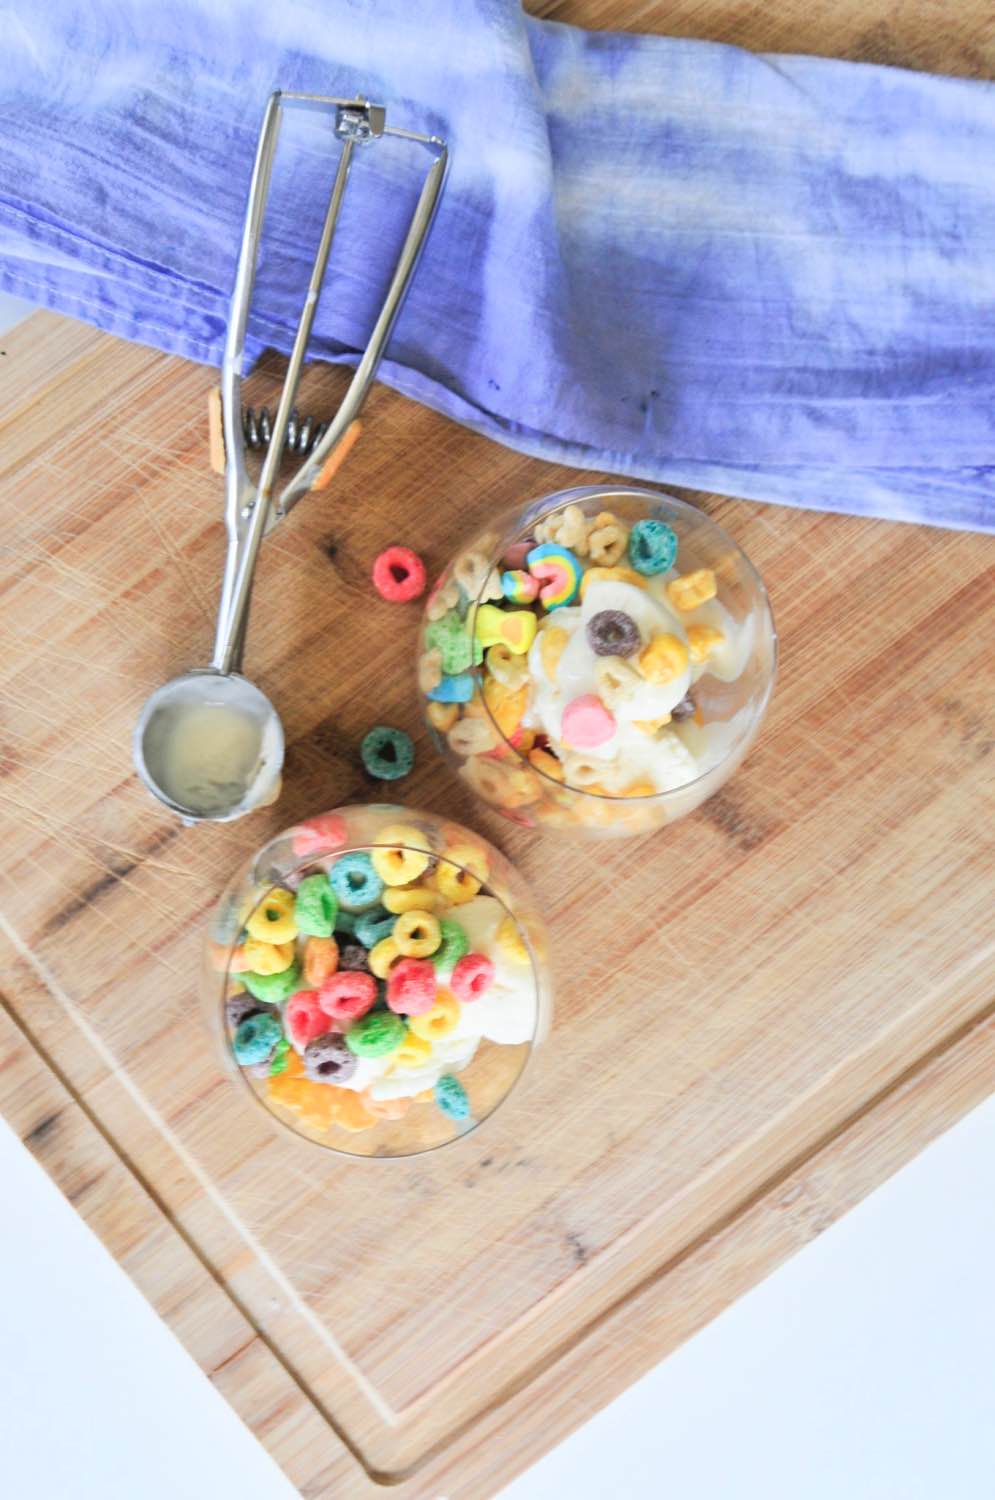 breakfast cereal frozen yogurt parfaits recipe pop shop america